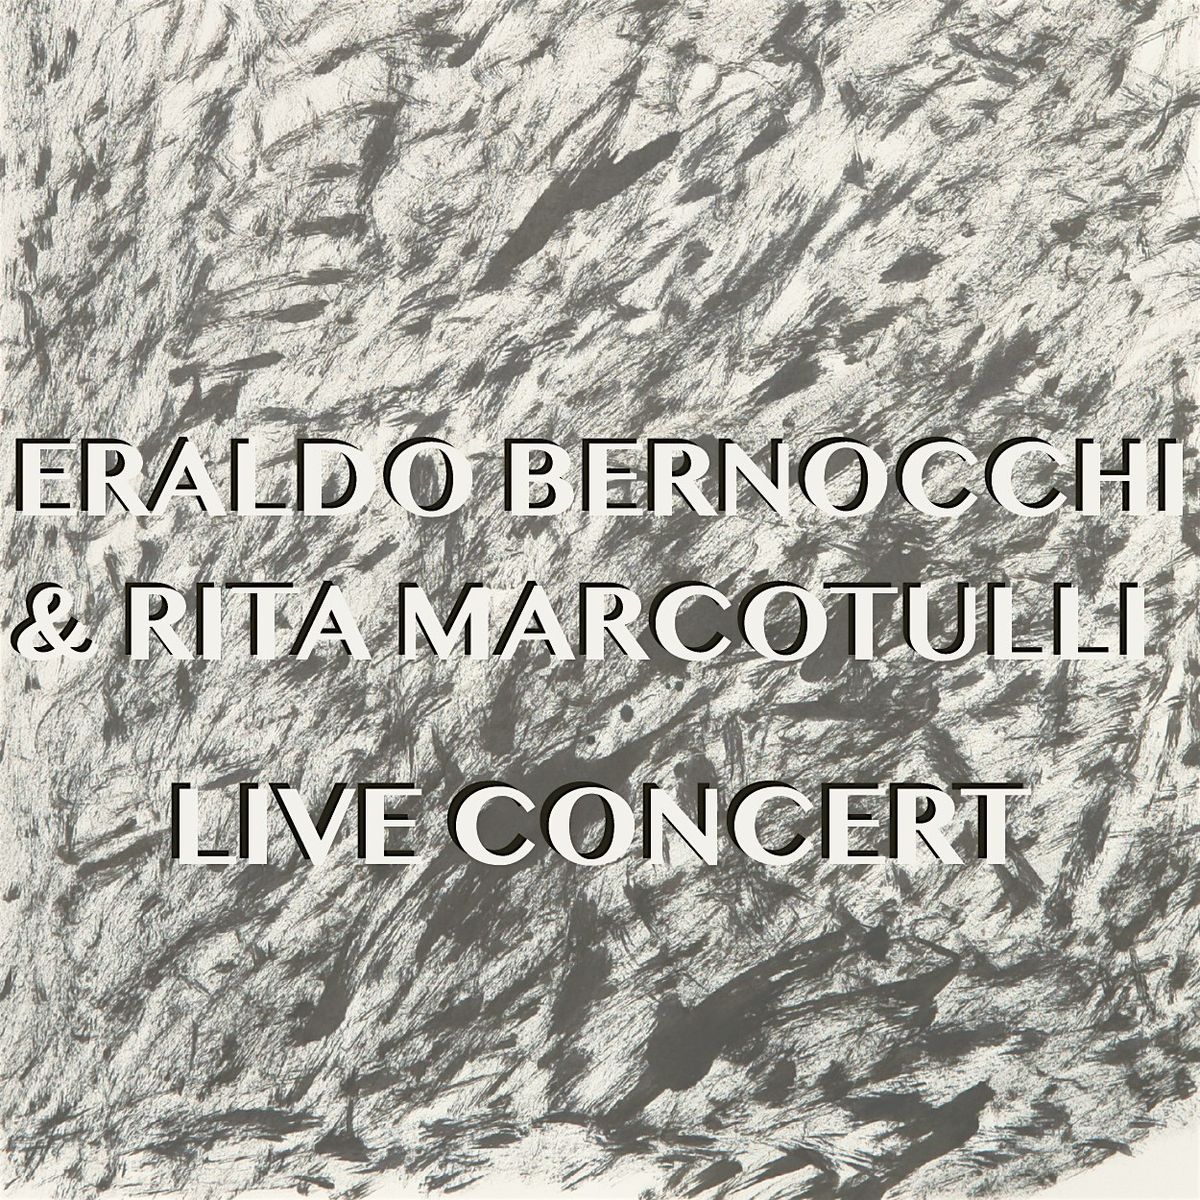 ERALDO BERNOCCHI & RITA MARCOTULLI Live concert